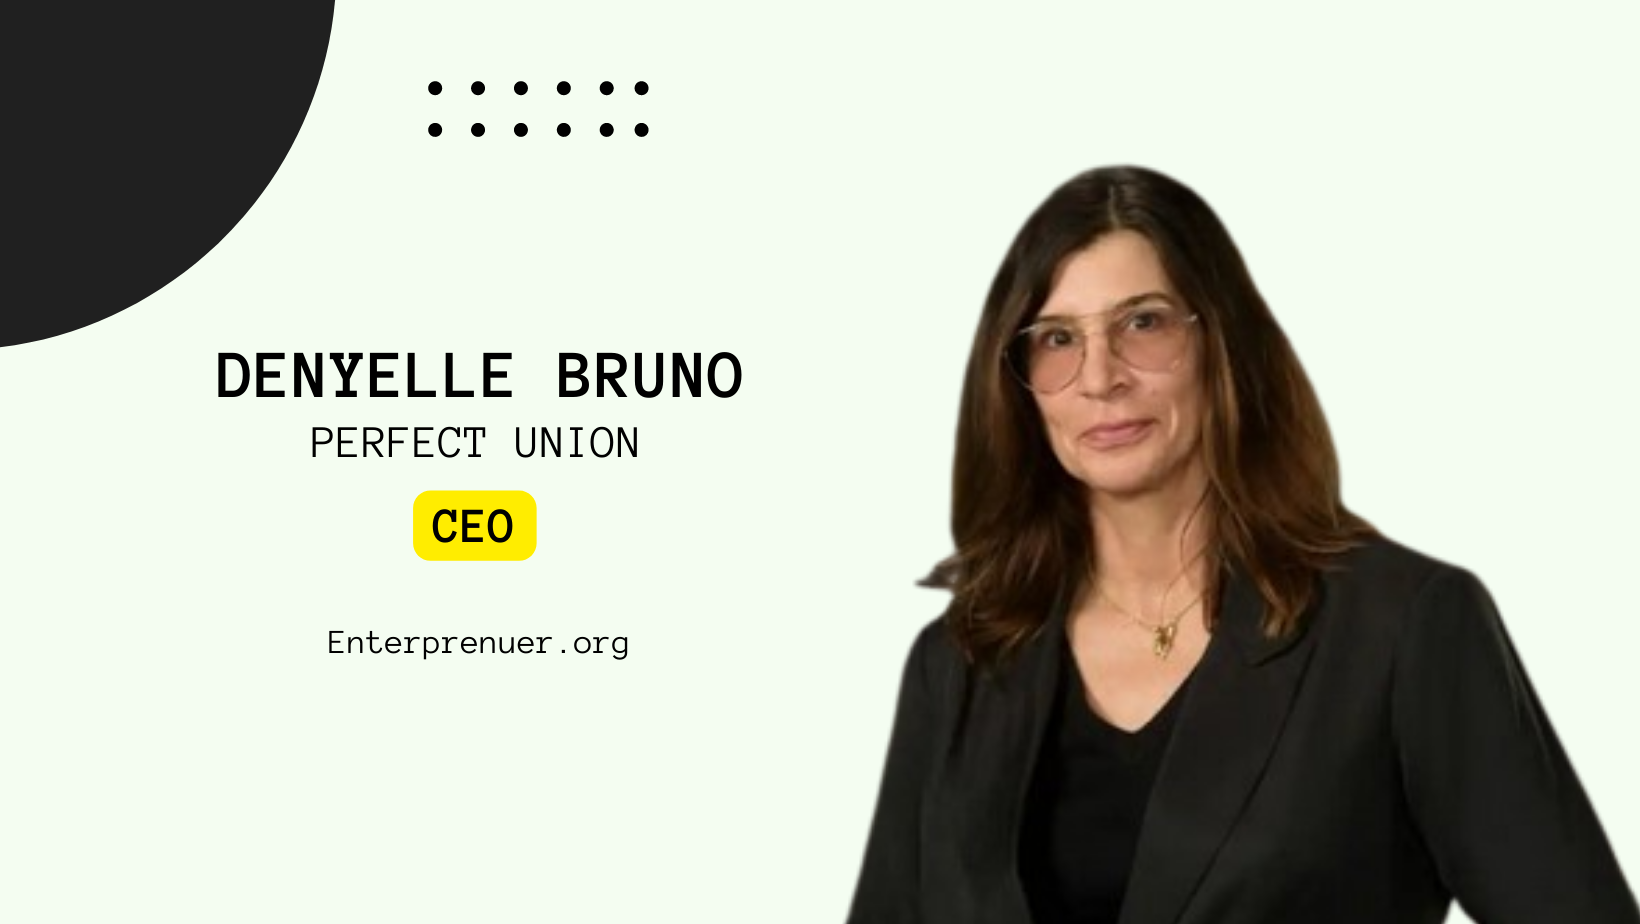 Denyelle Bruno CEO of Perfect Union